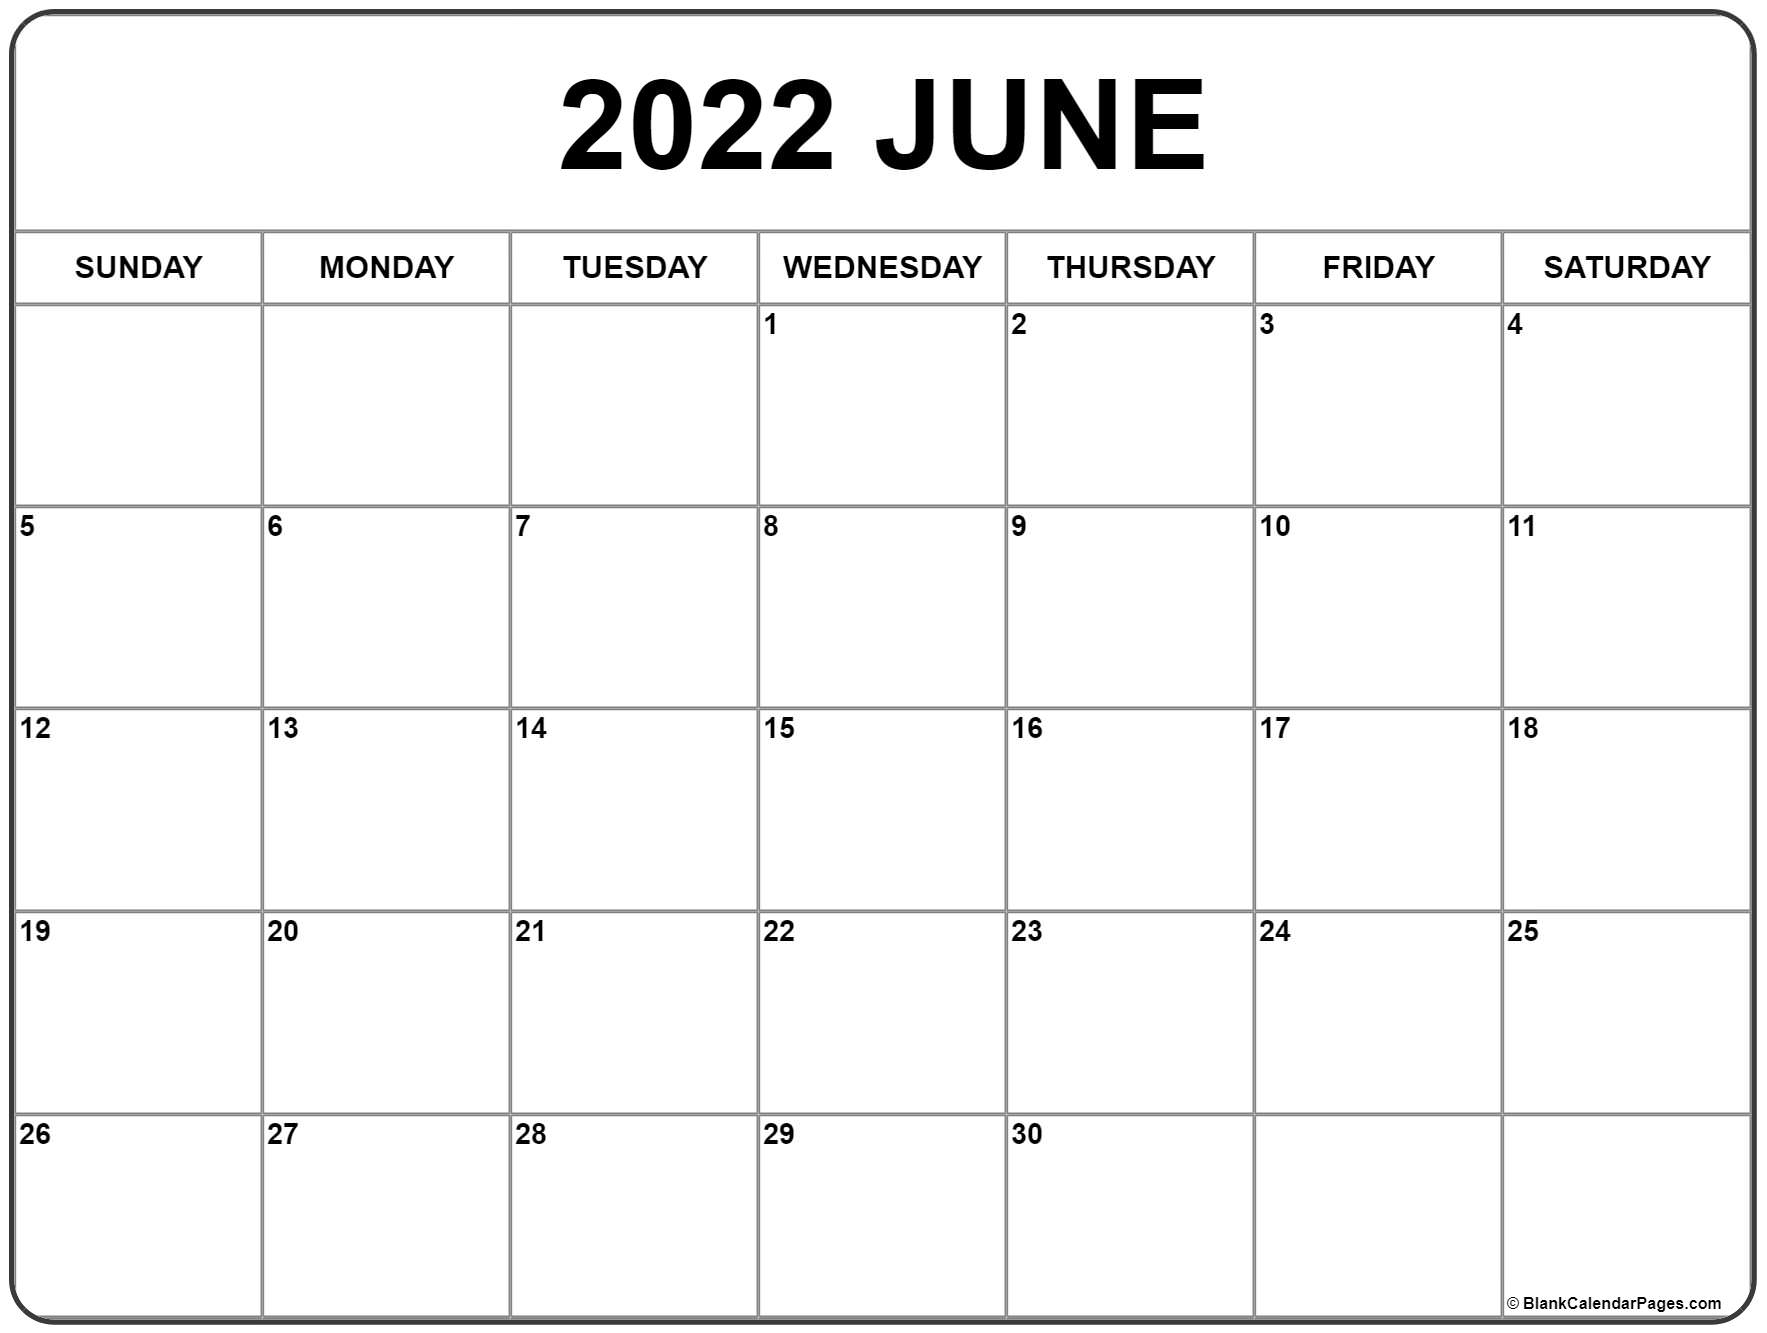 June 2022 Calendar | Free Printable Calendar Templates